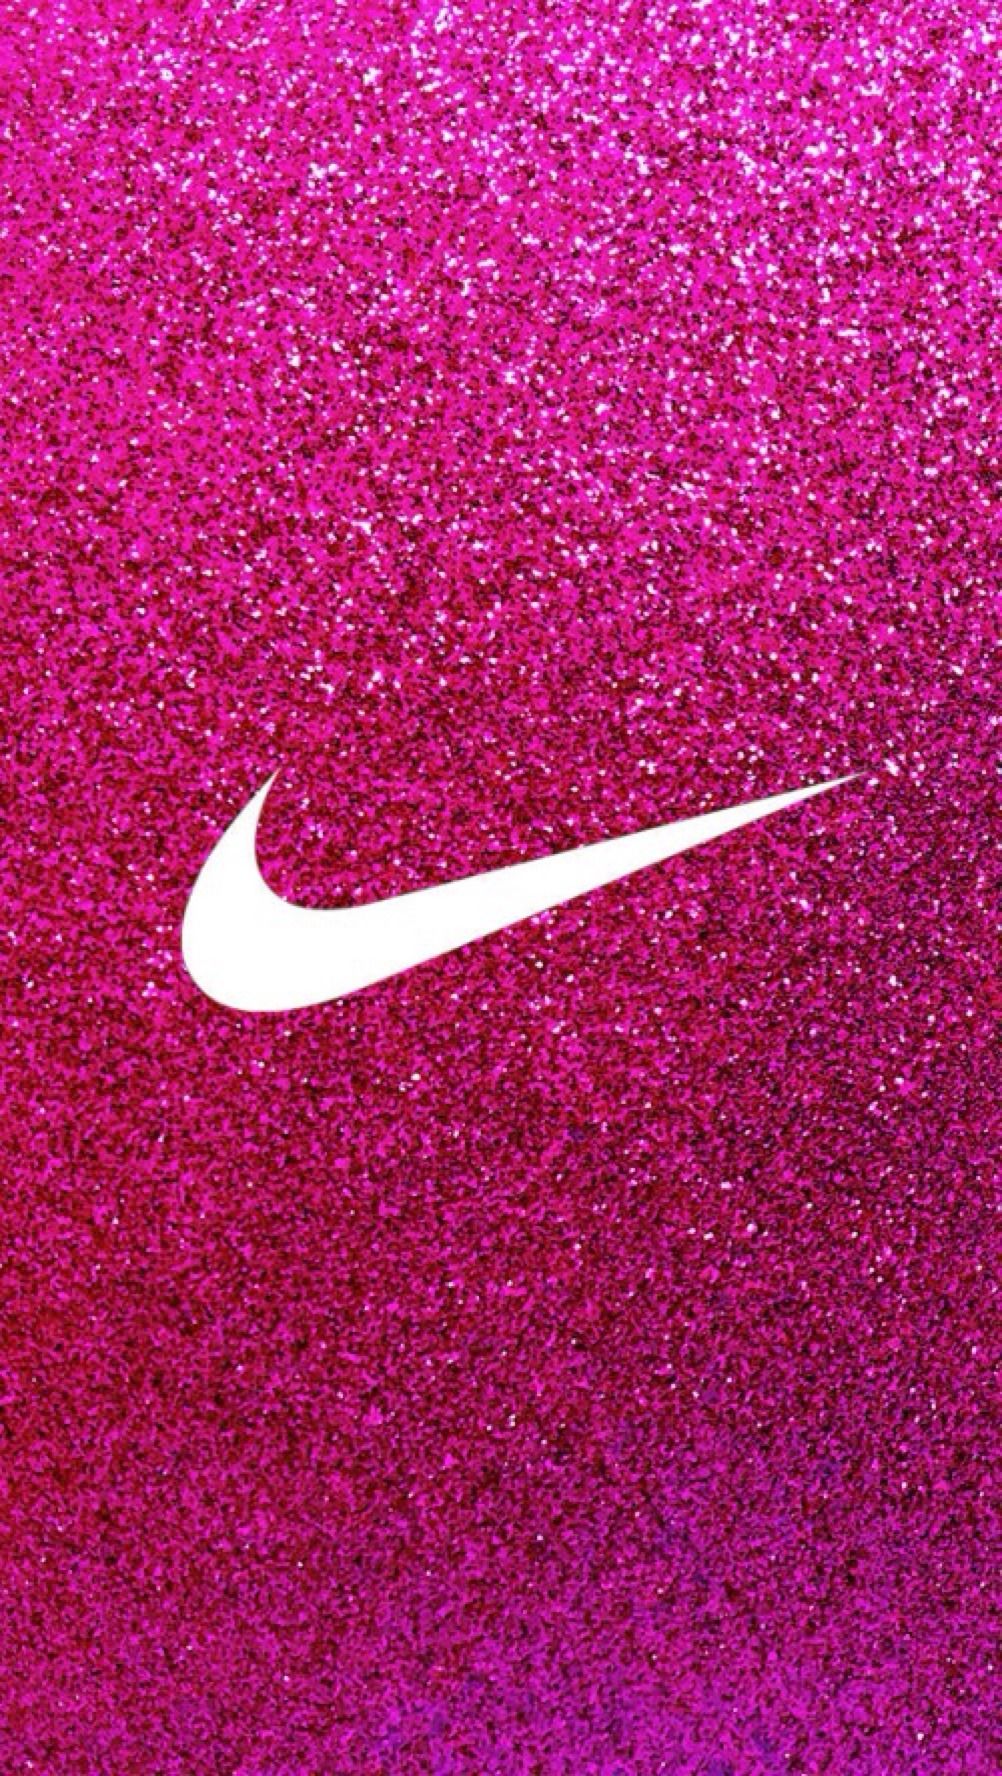 Pink Nike Background